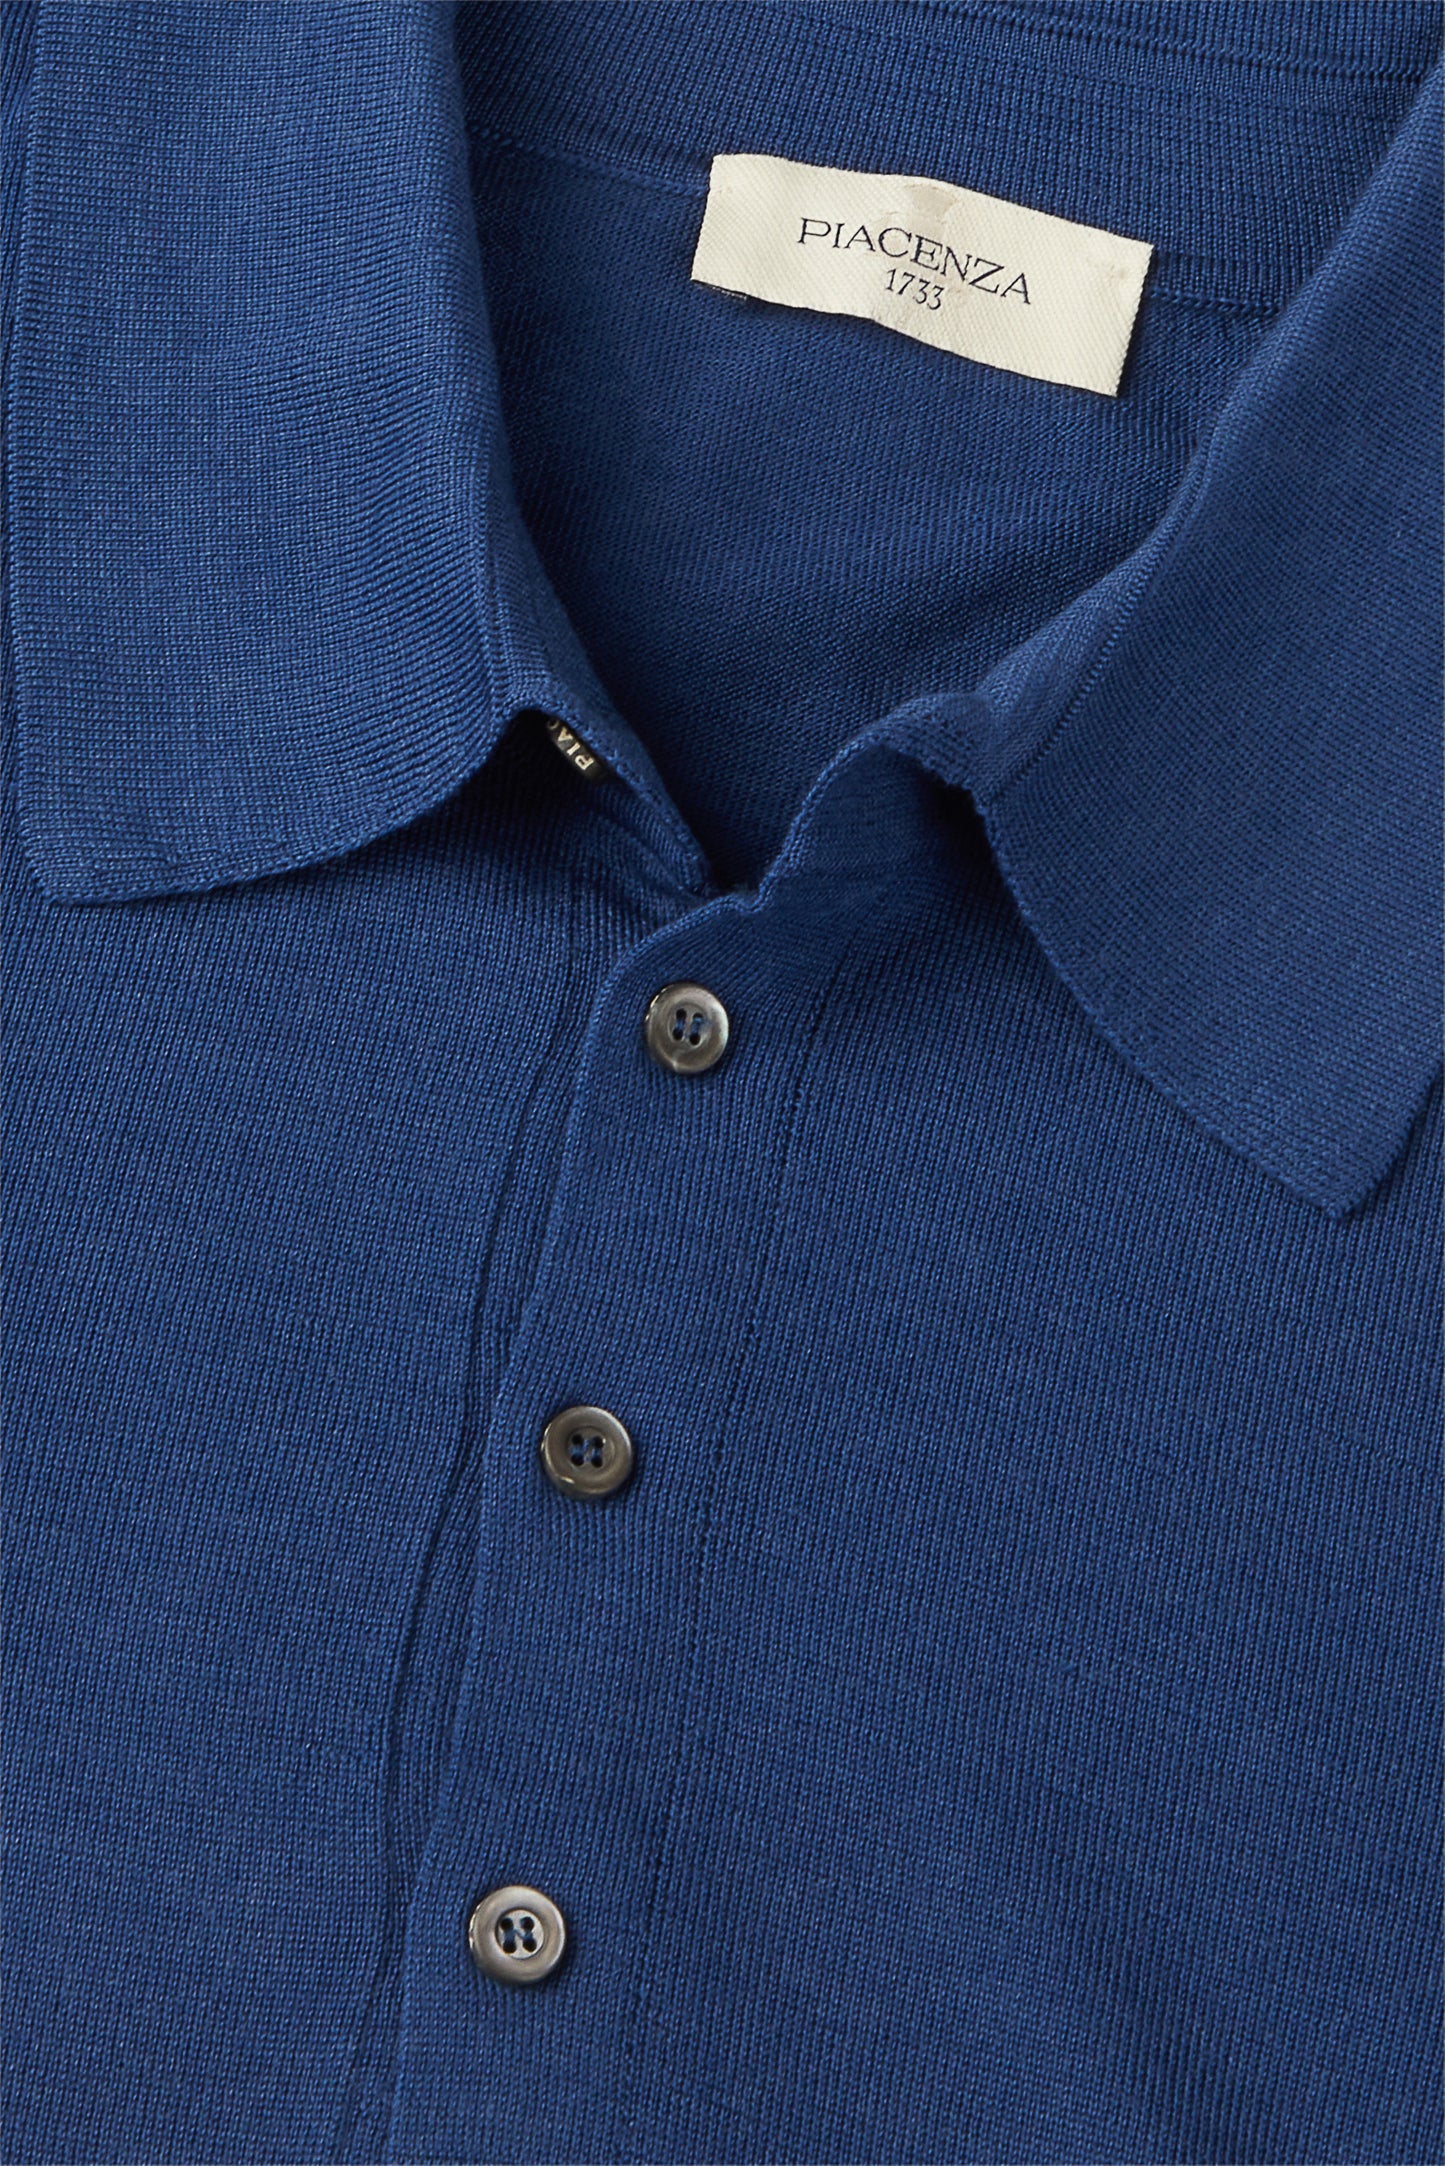 Super fine blue merino wool polo shirt